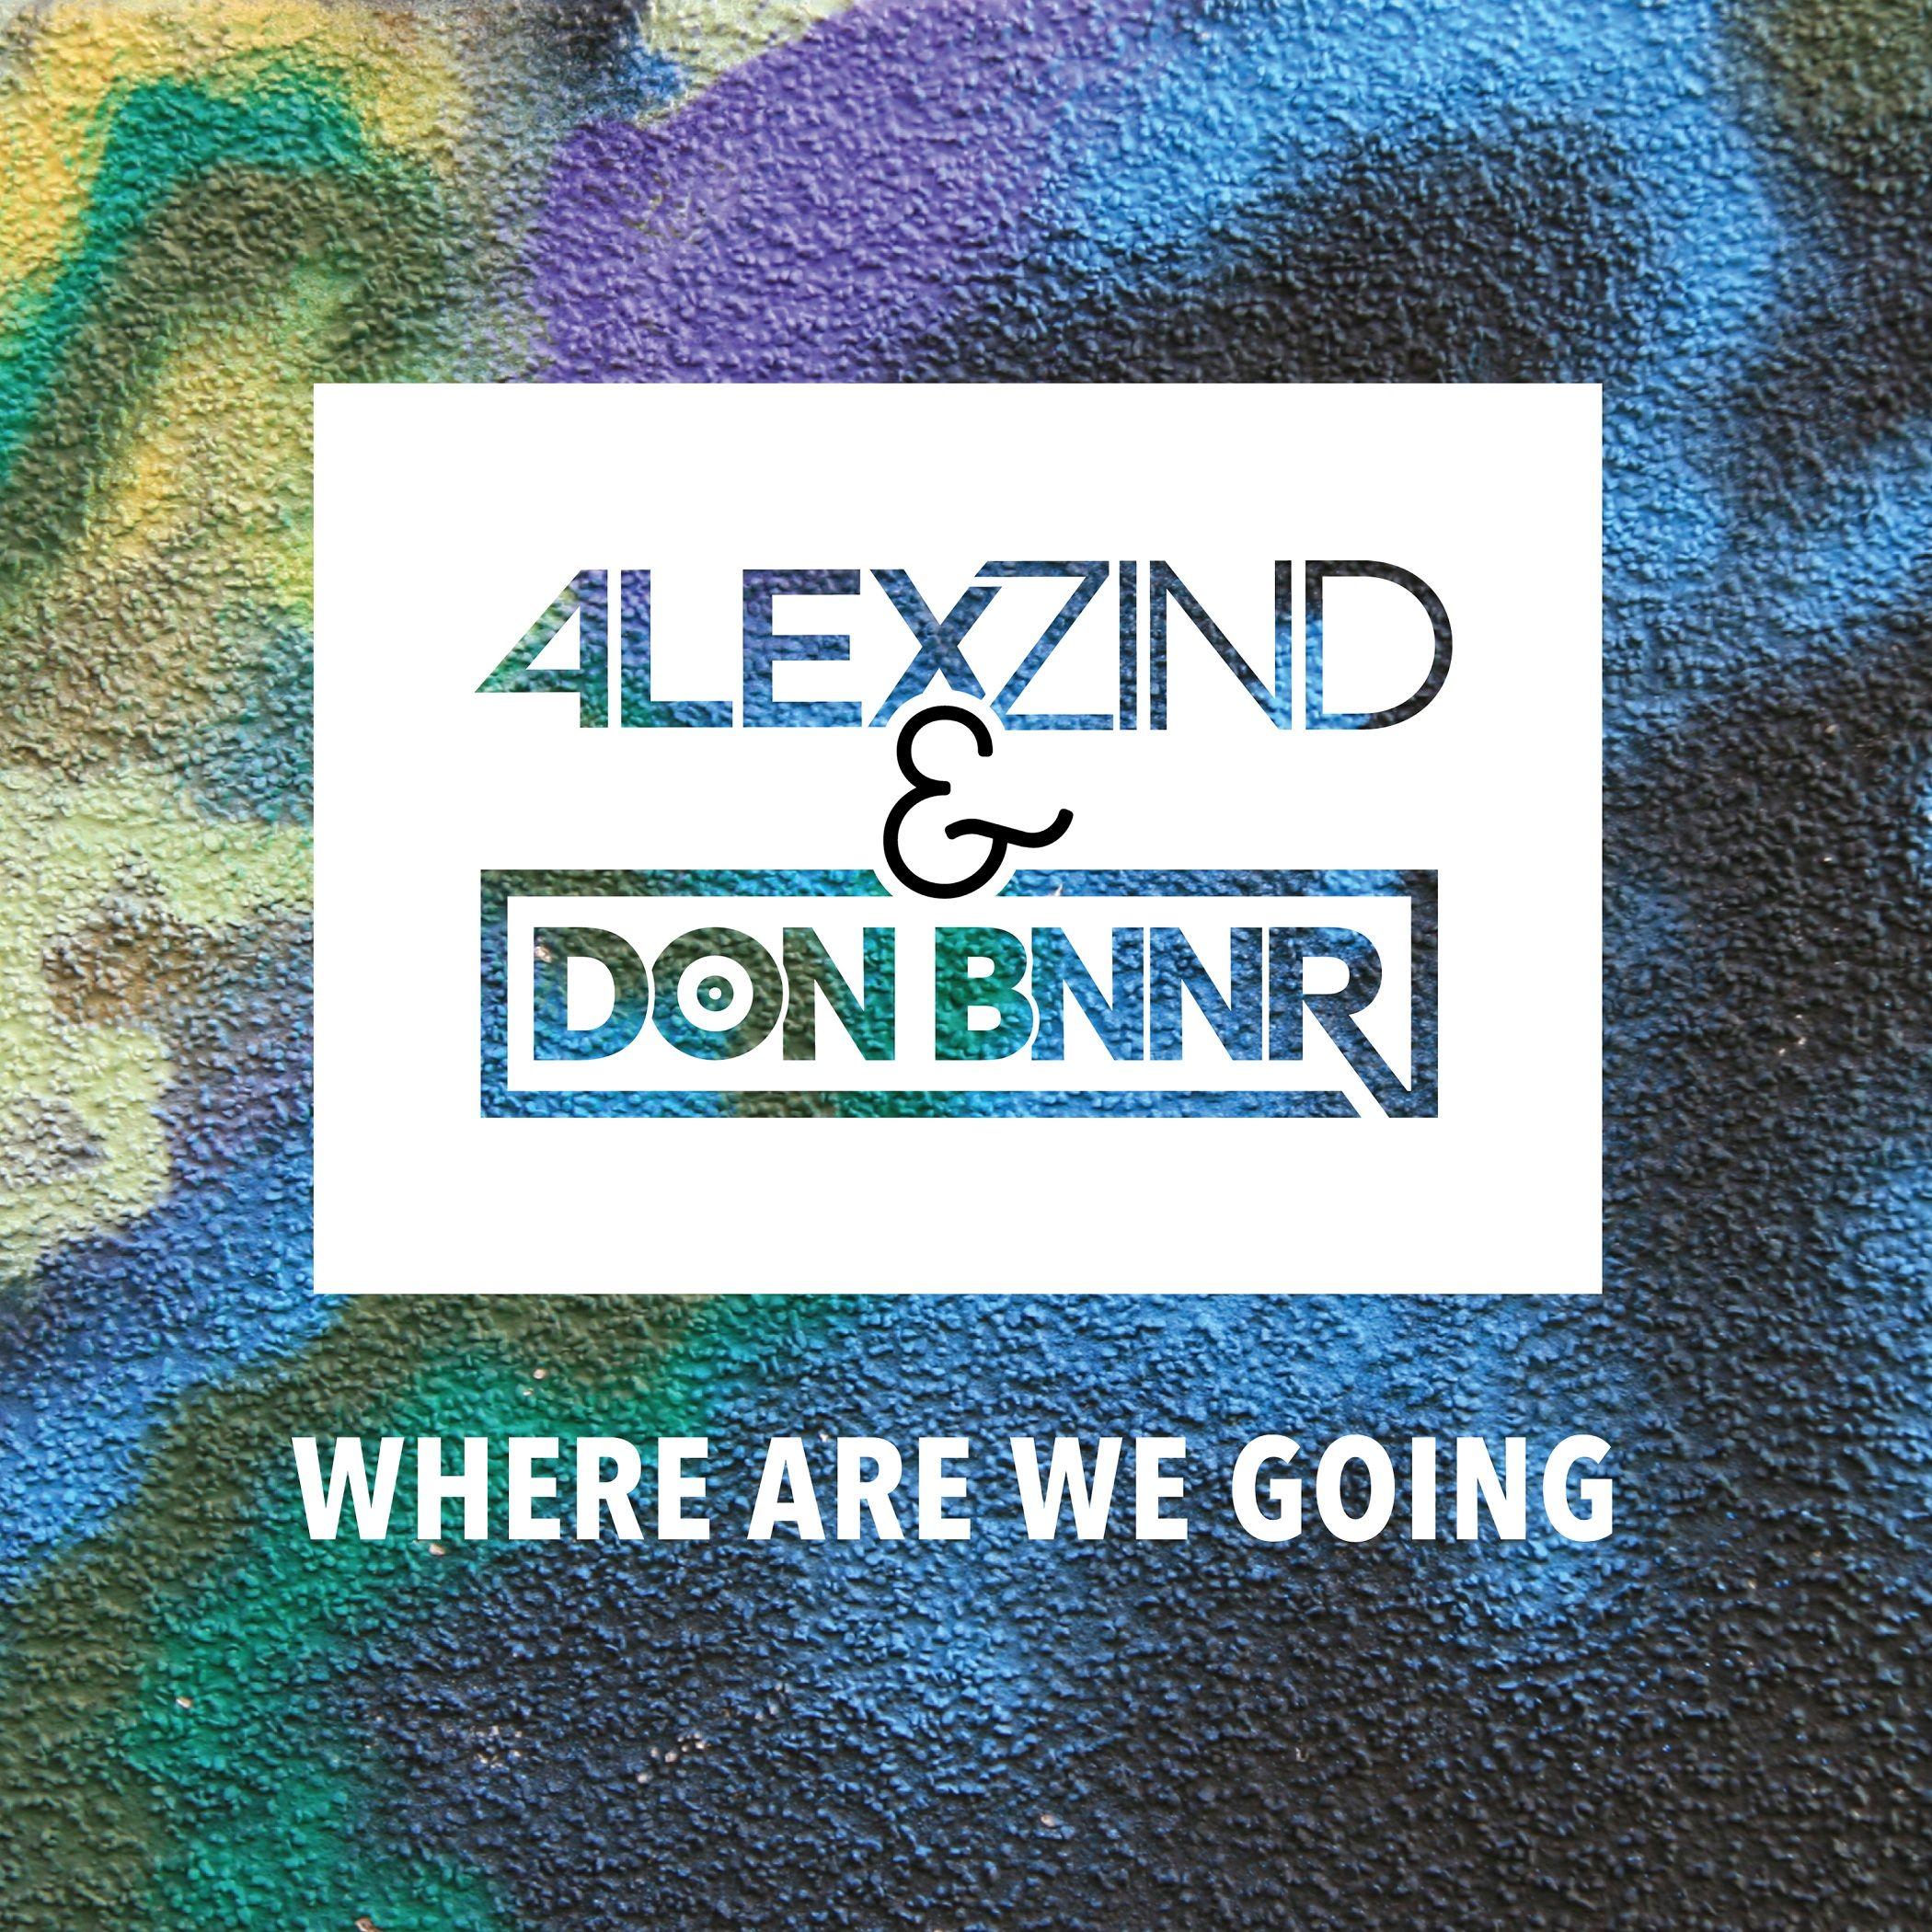 Alex Zind & Don Bnnr